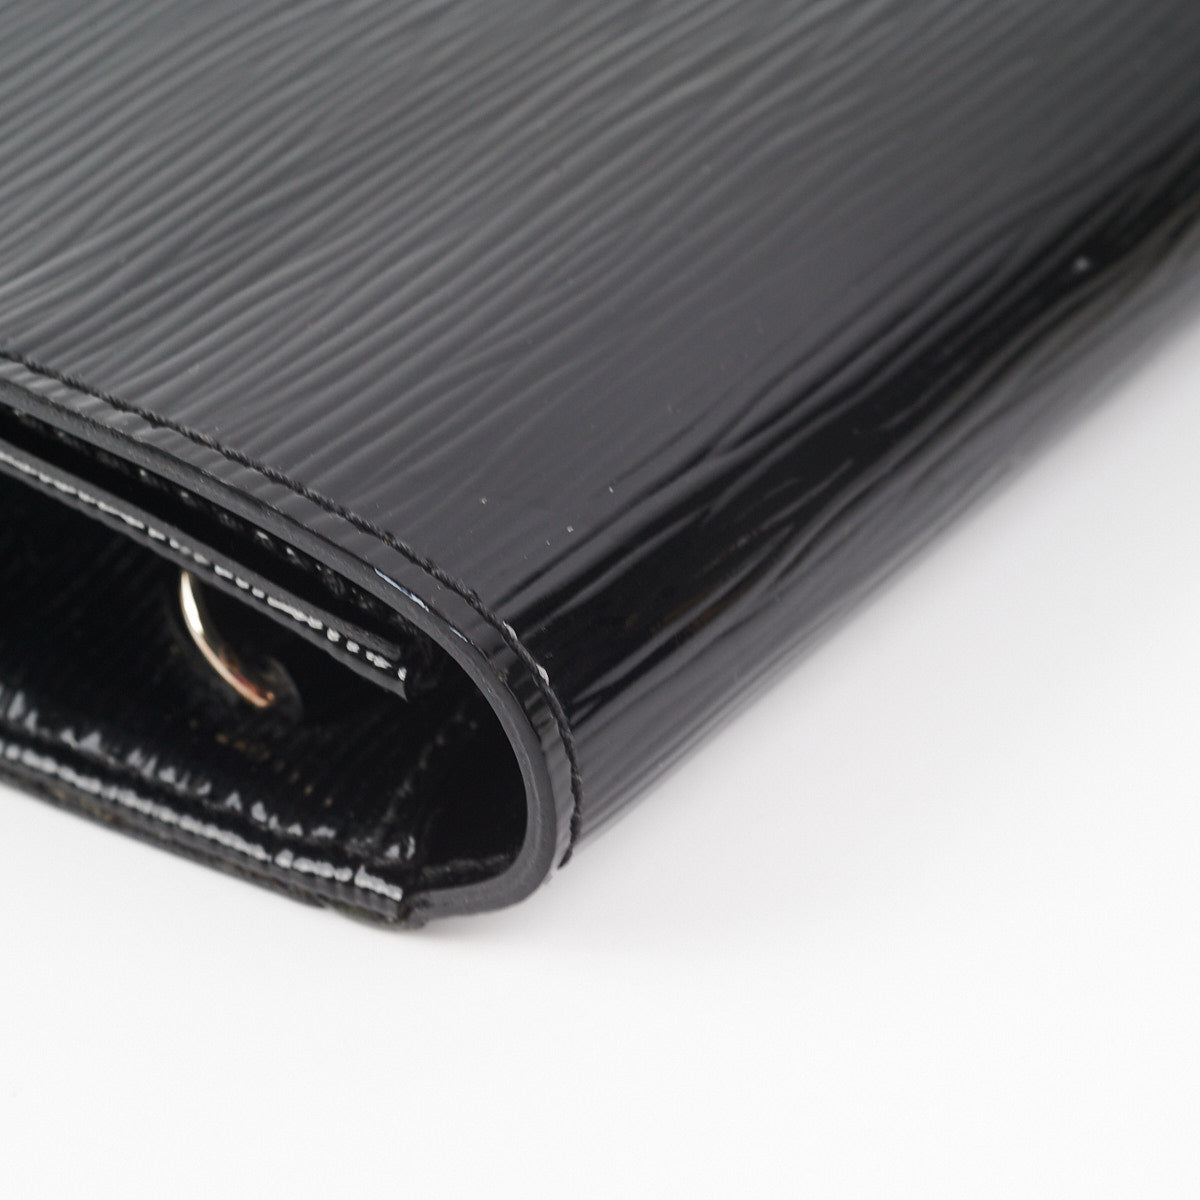 Louis Vuitton Limited Edition Essential V Platine Epi Strap Clutch